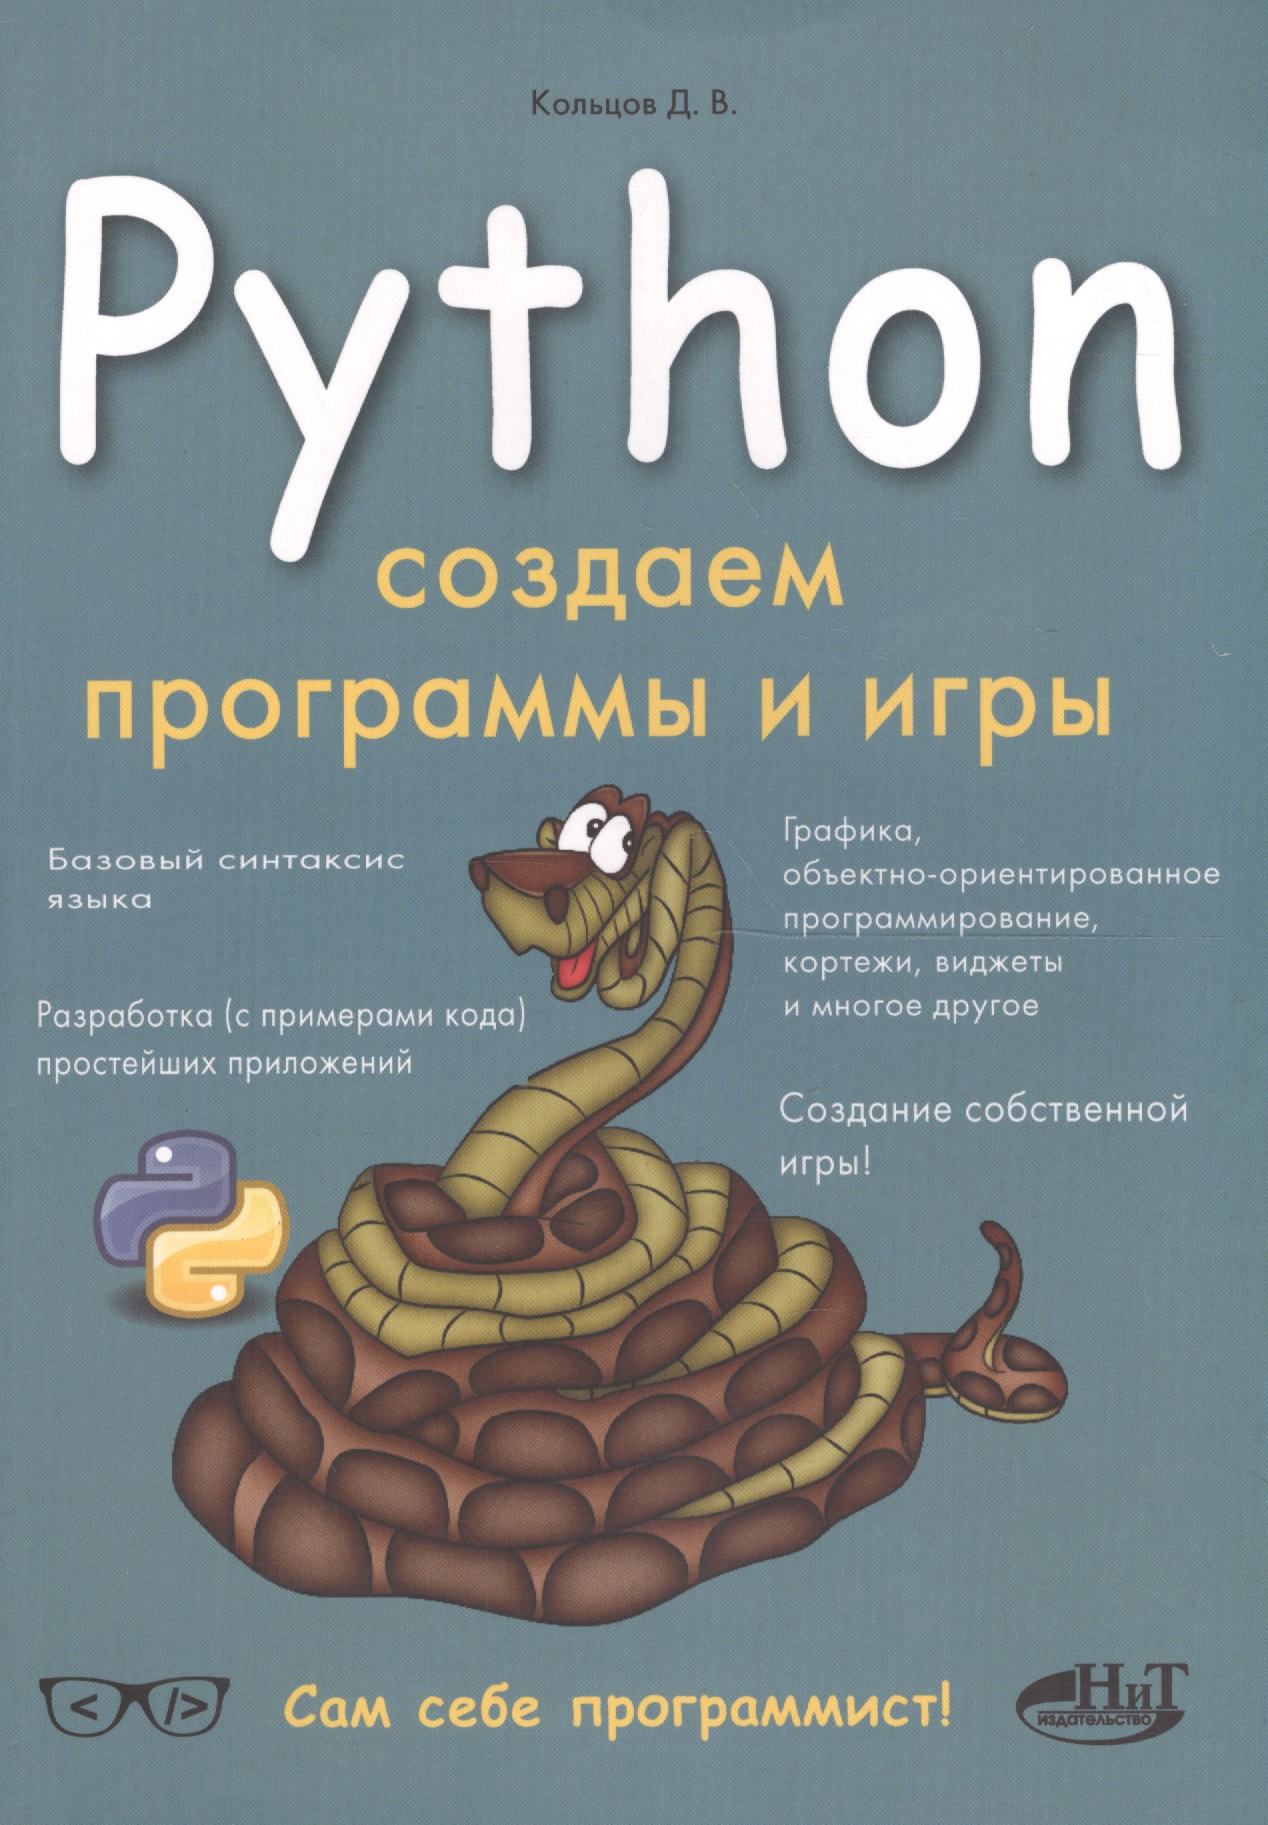 Начало программы на python. Питон язык программирования. Питон программа. Программирование на Python. Разработка на Python.